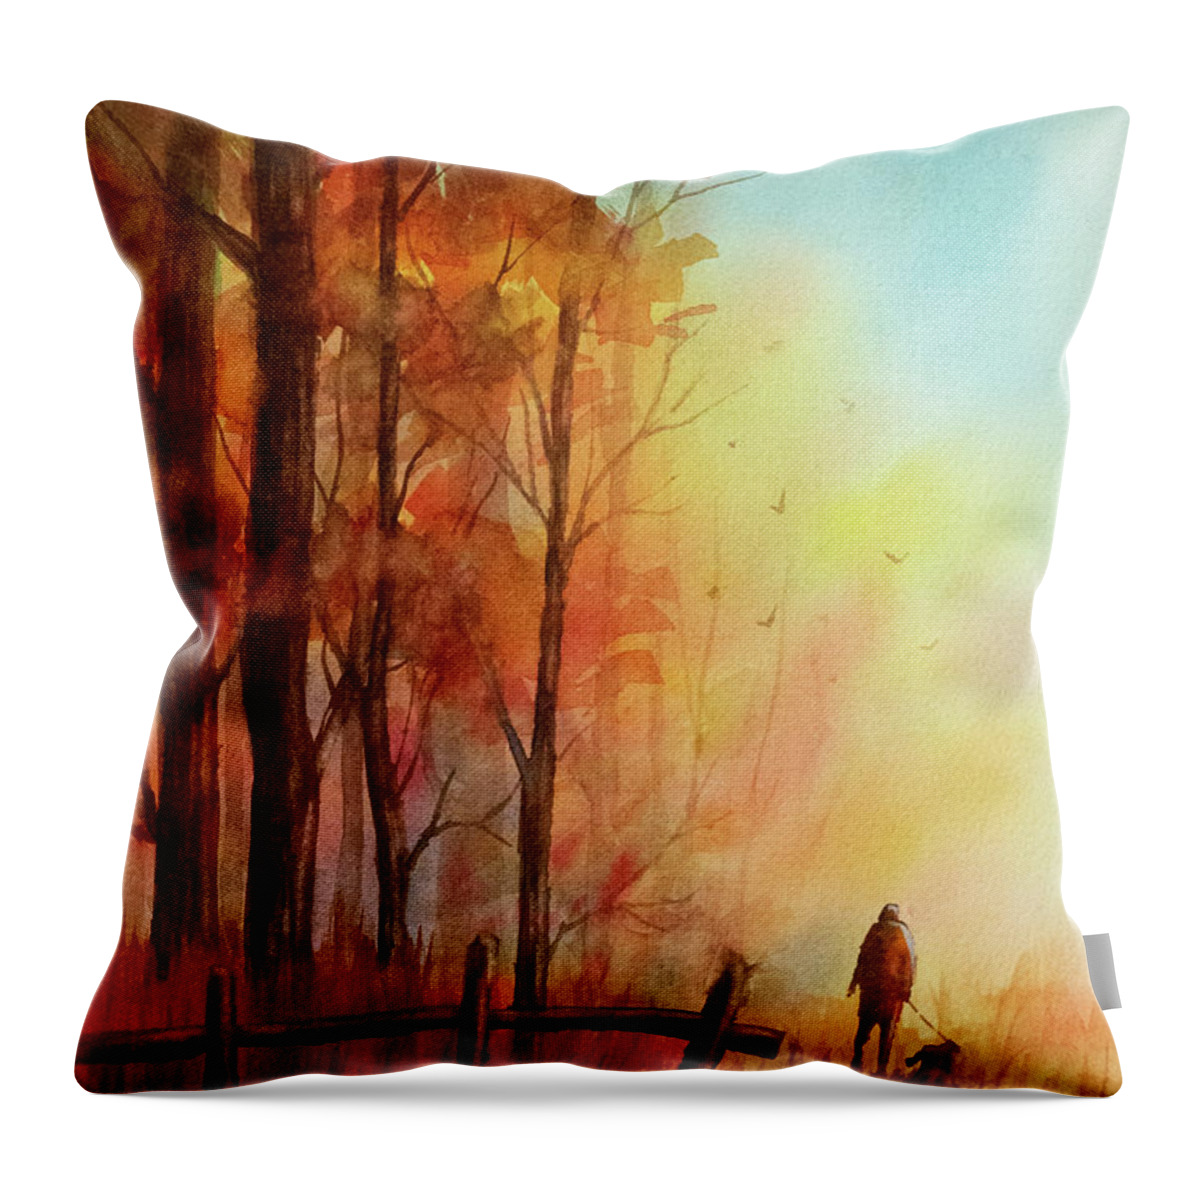 Autumn Throw Pillow featuring the painting An Autumn Walk by Rebecca Davis